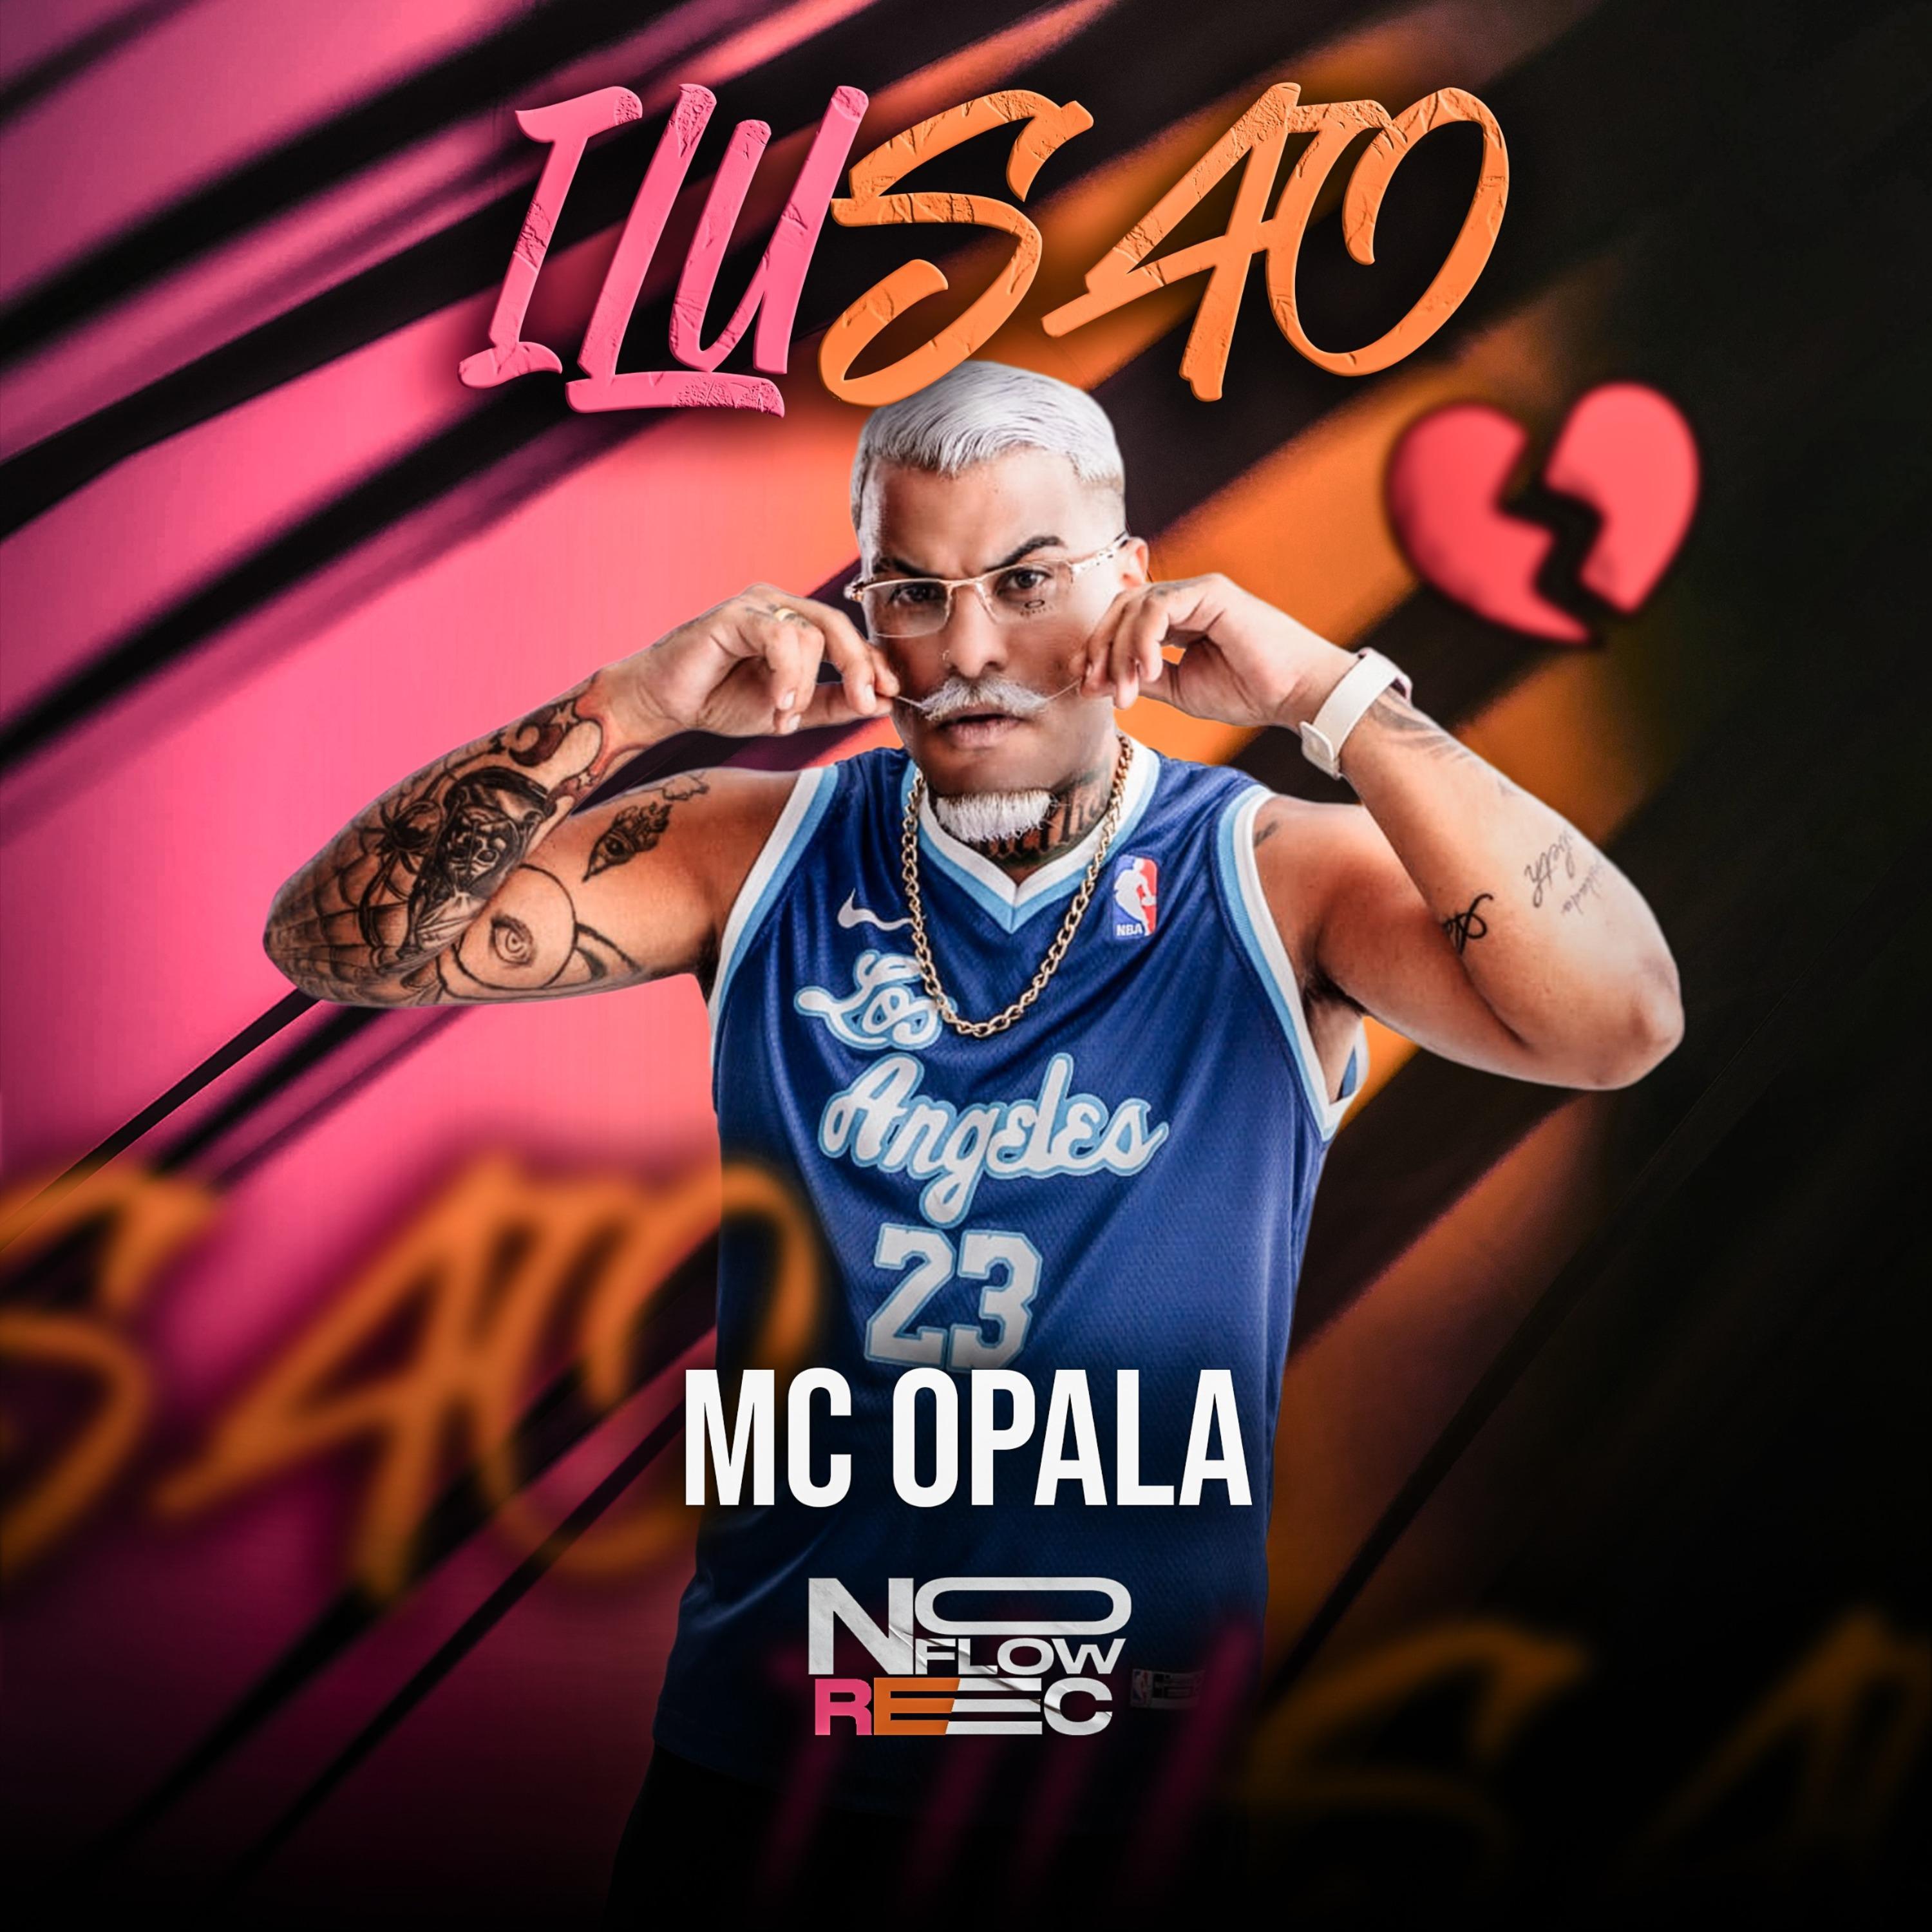 Постер альбома Ilusão